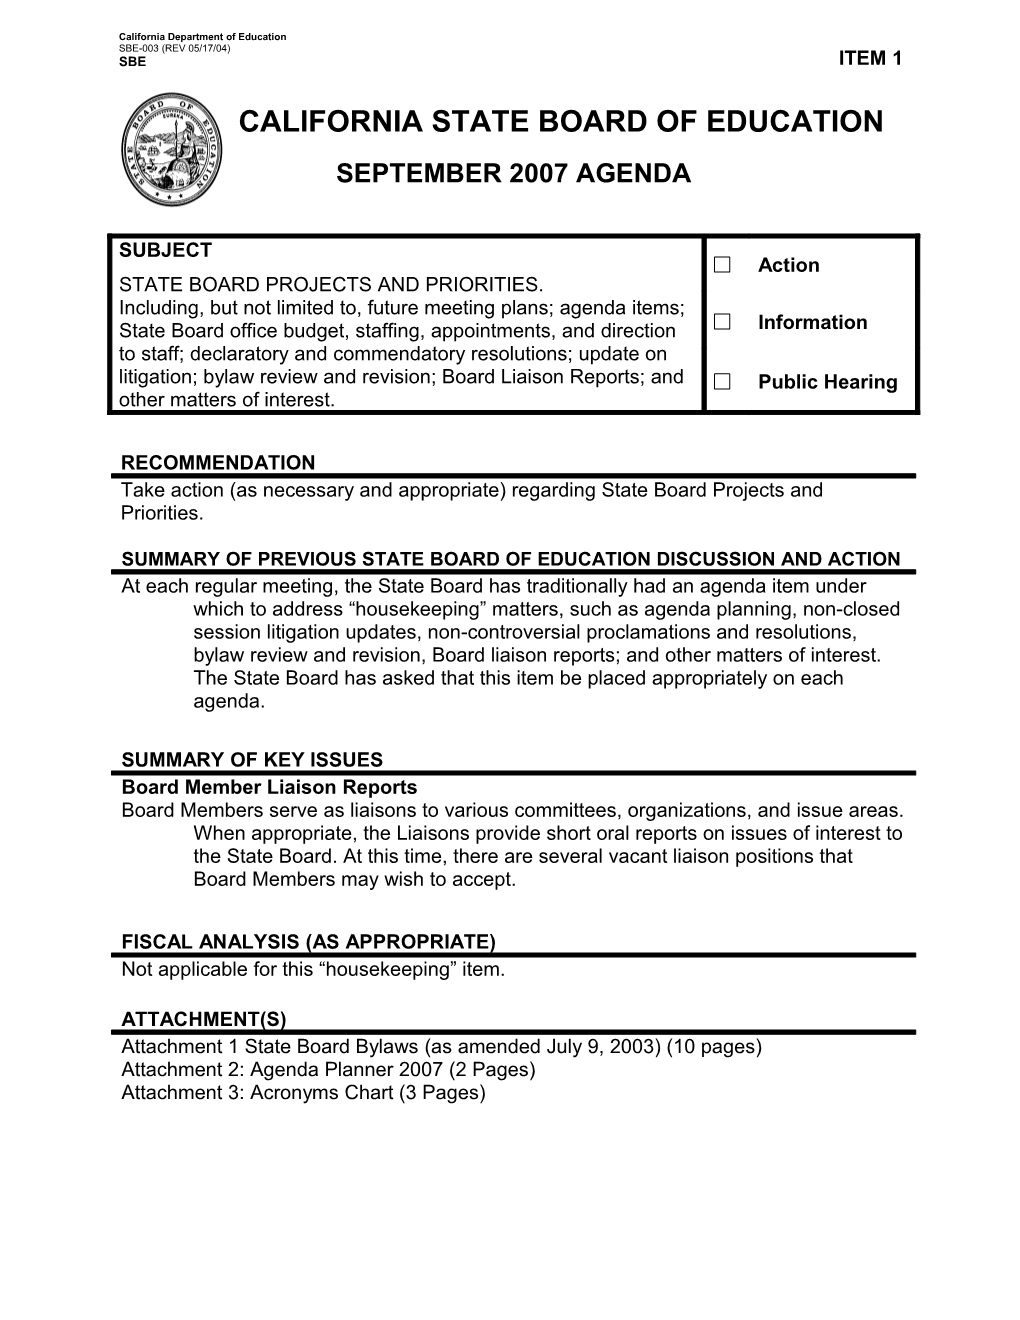 September 2007 Agenda Item 1 - Meeting Agendas (CA State Board of Education)